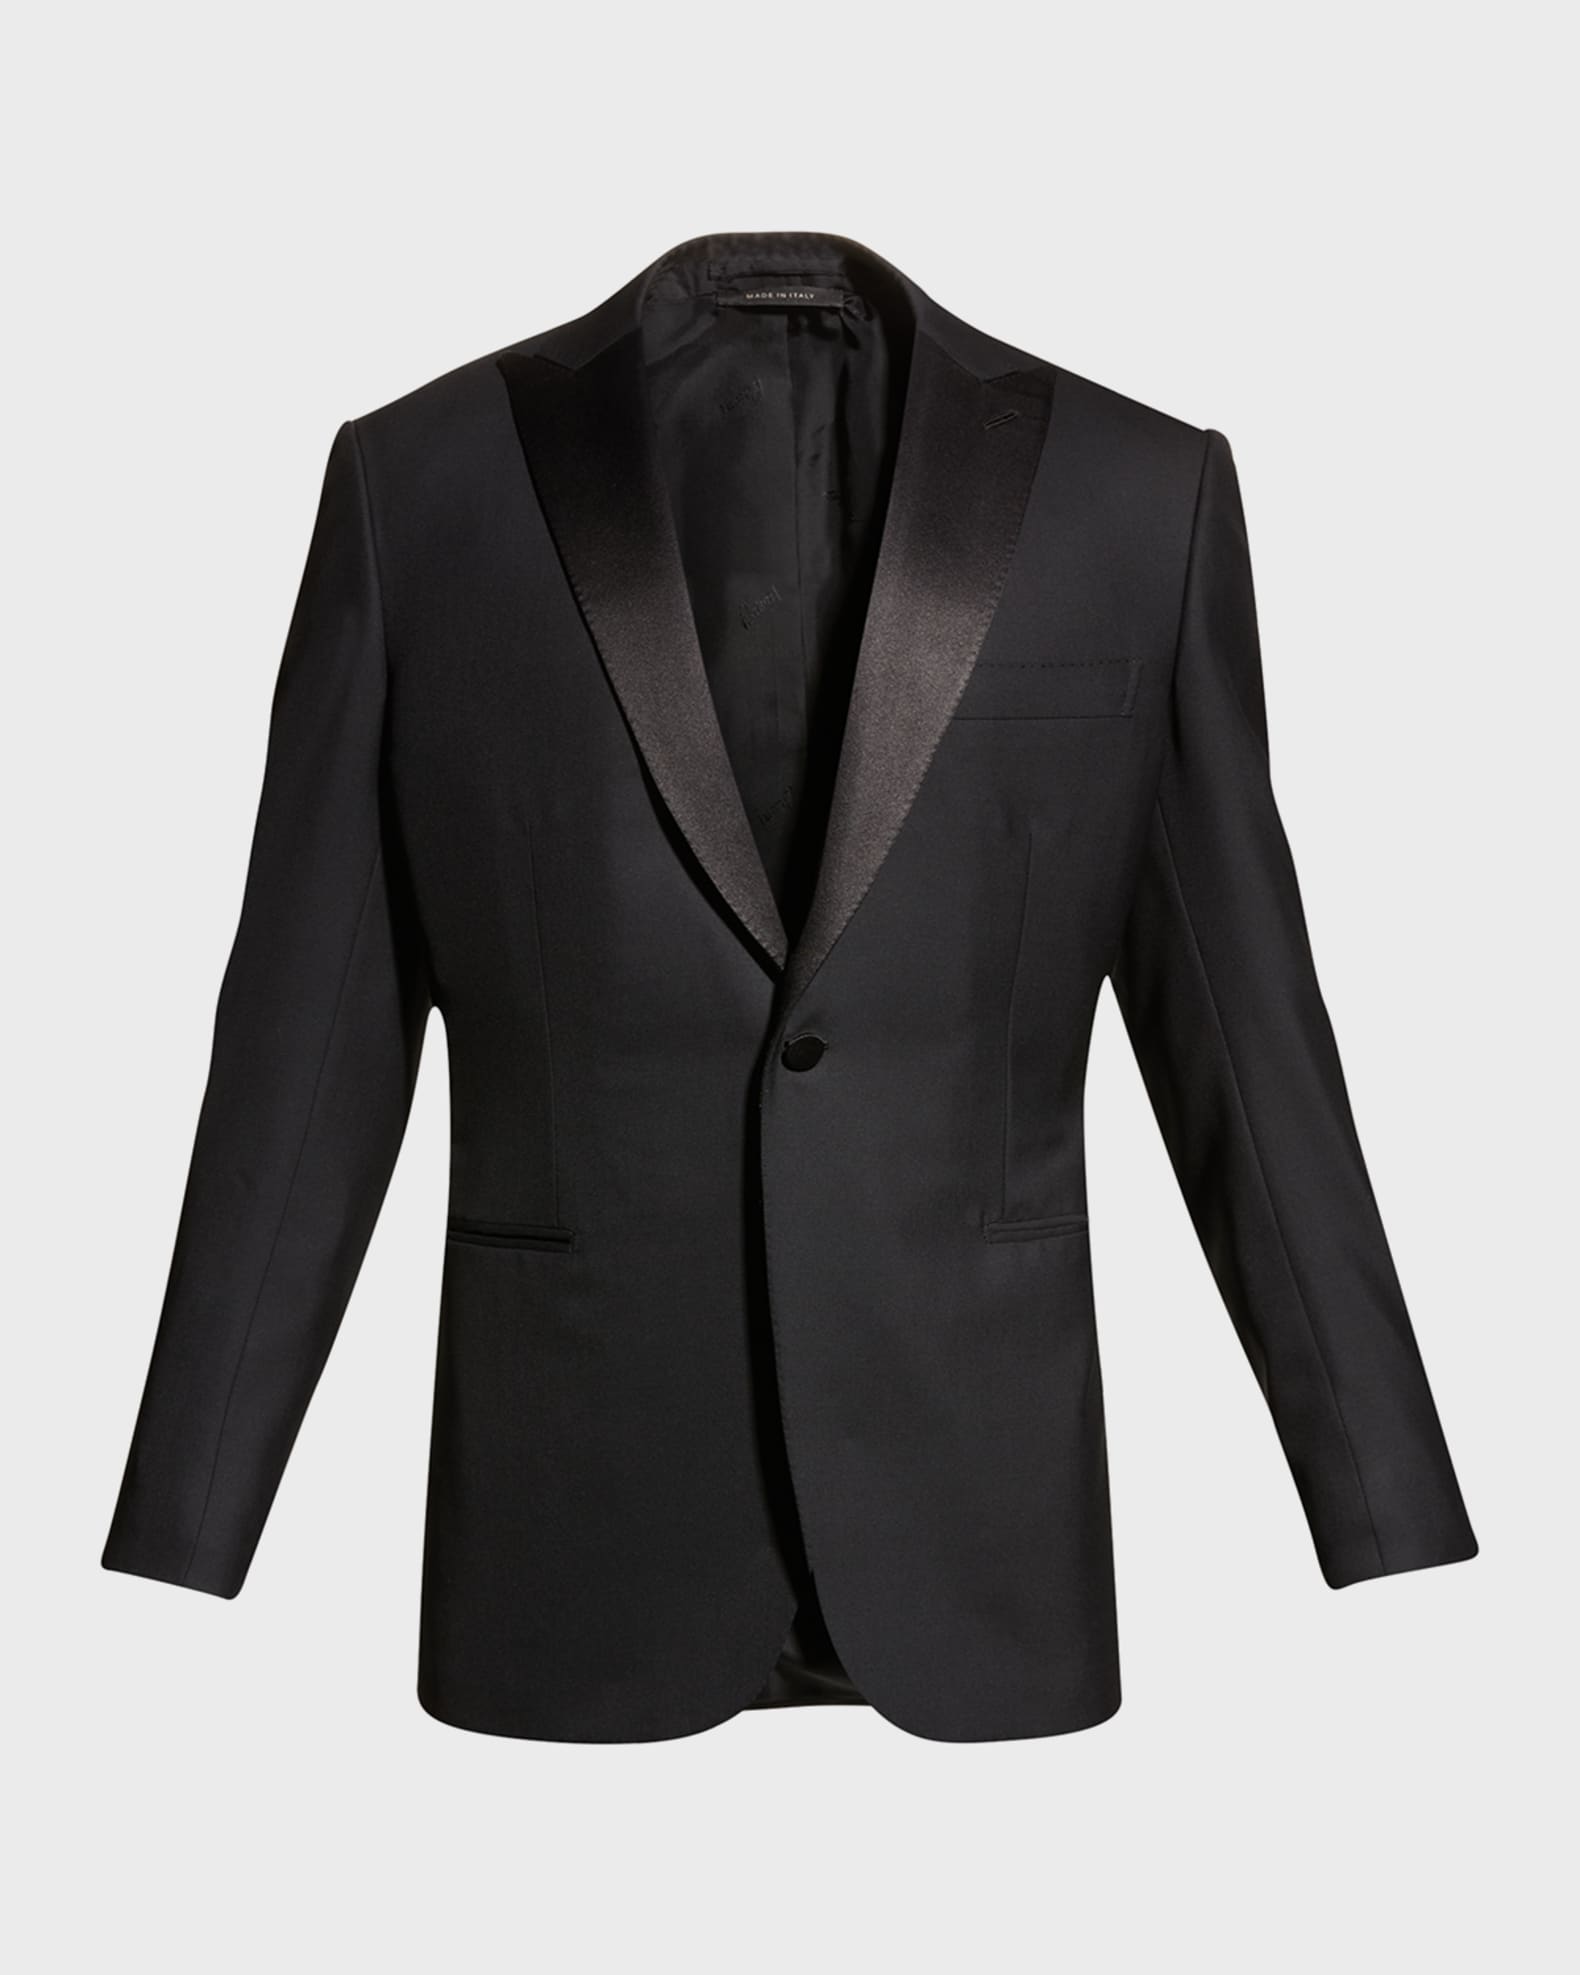 Brioni Men's Solid Wool Tuxedo | Neiman Marcus